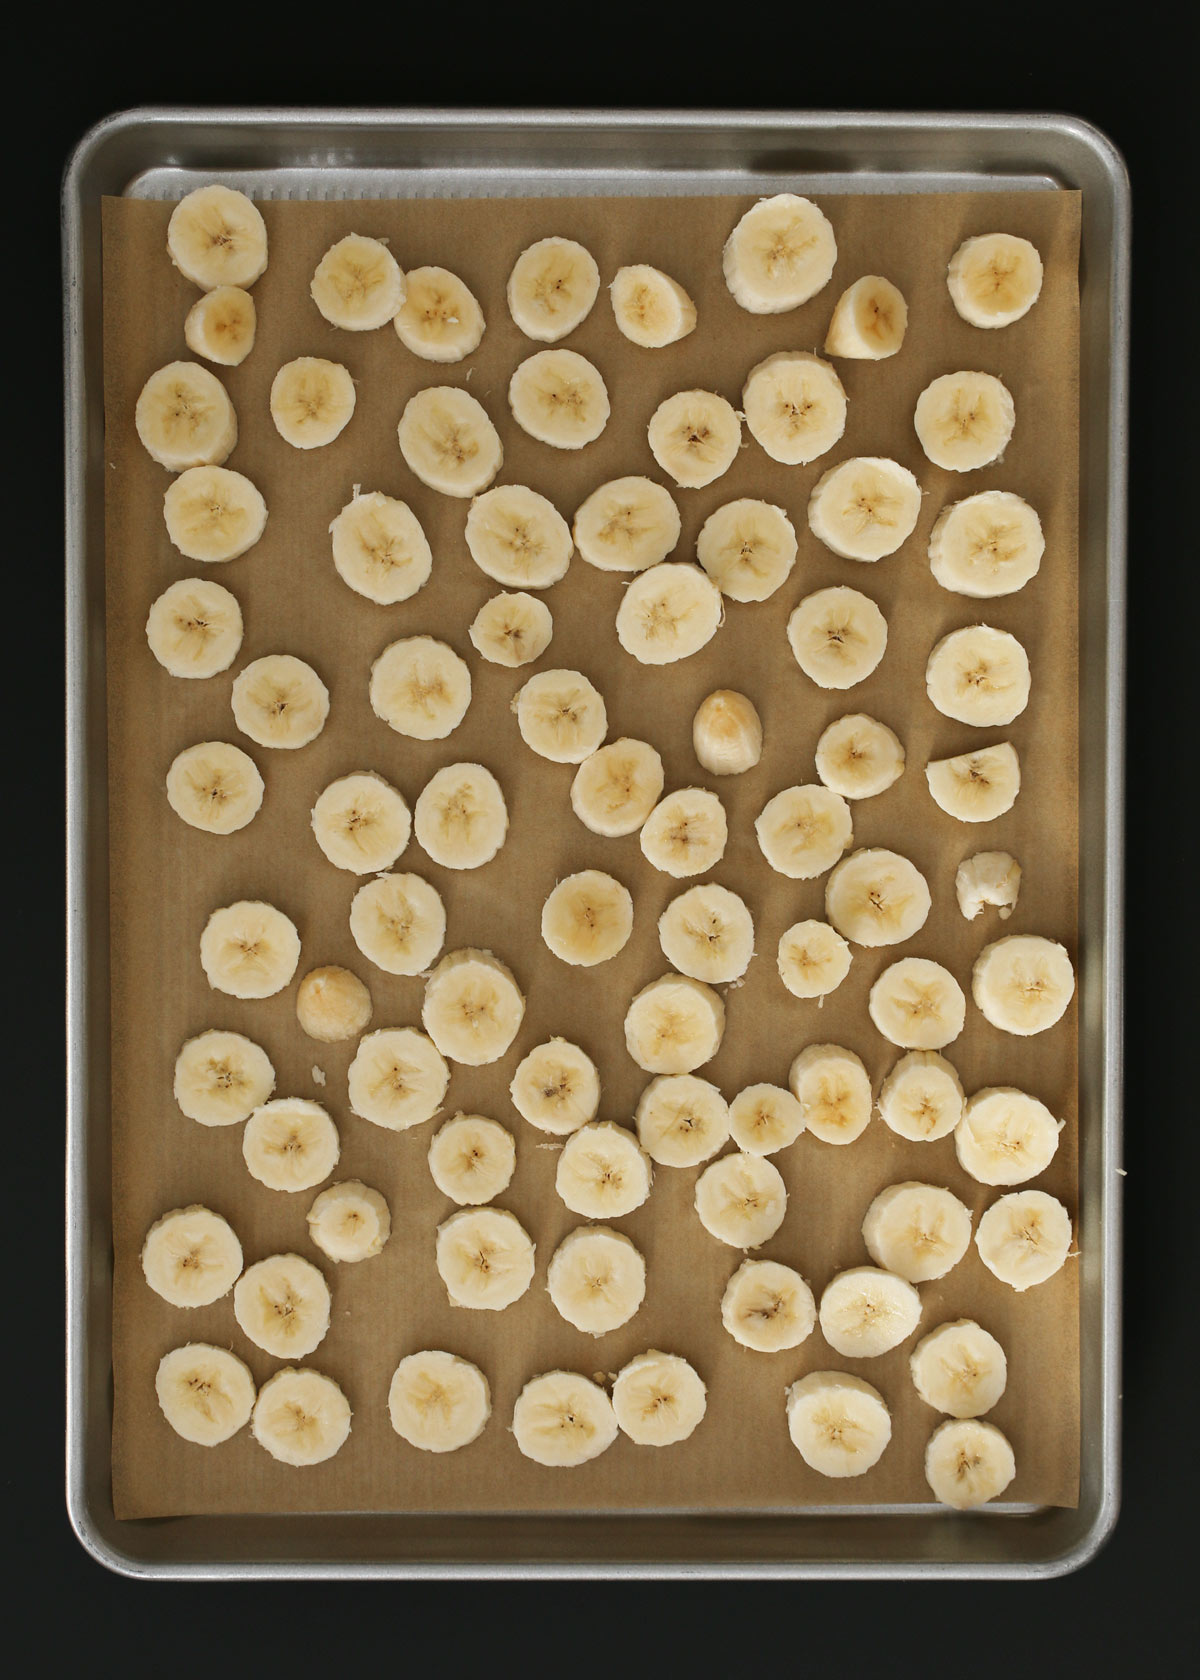 frozen banana slices on lined baking sheet.